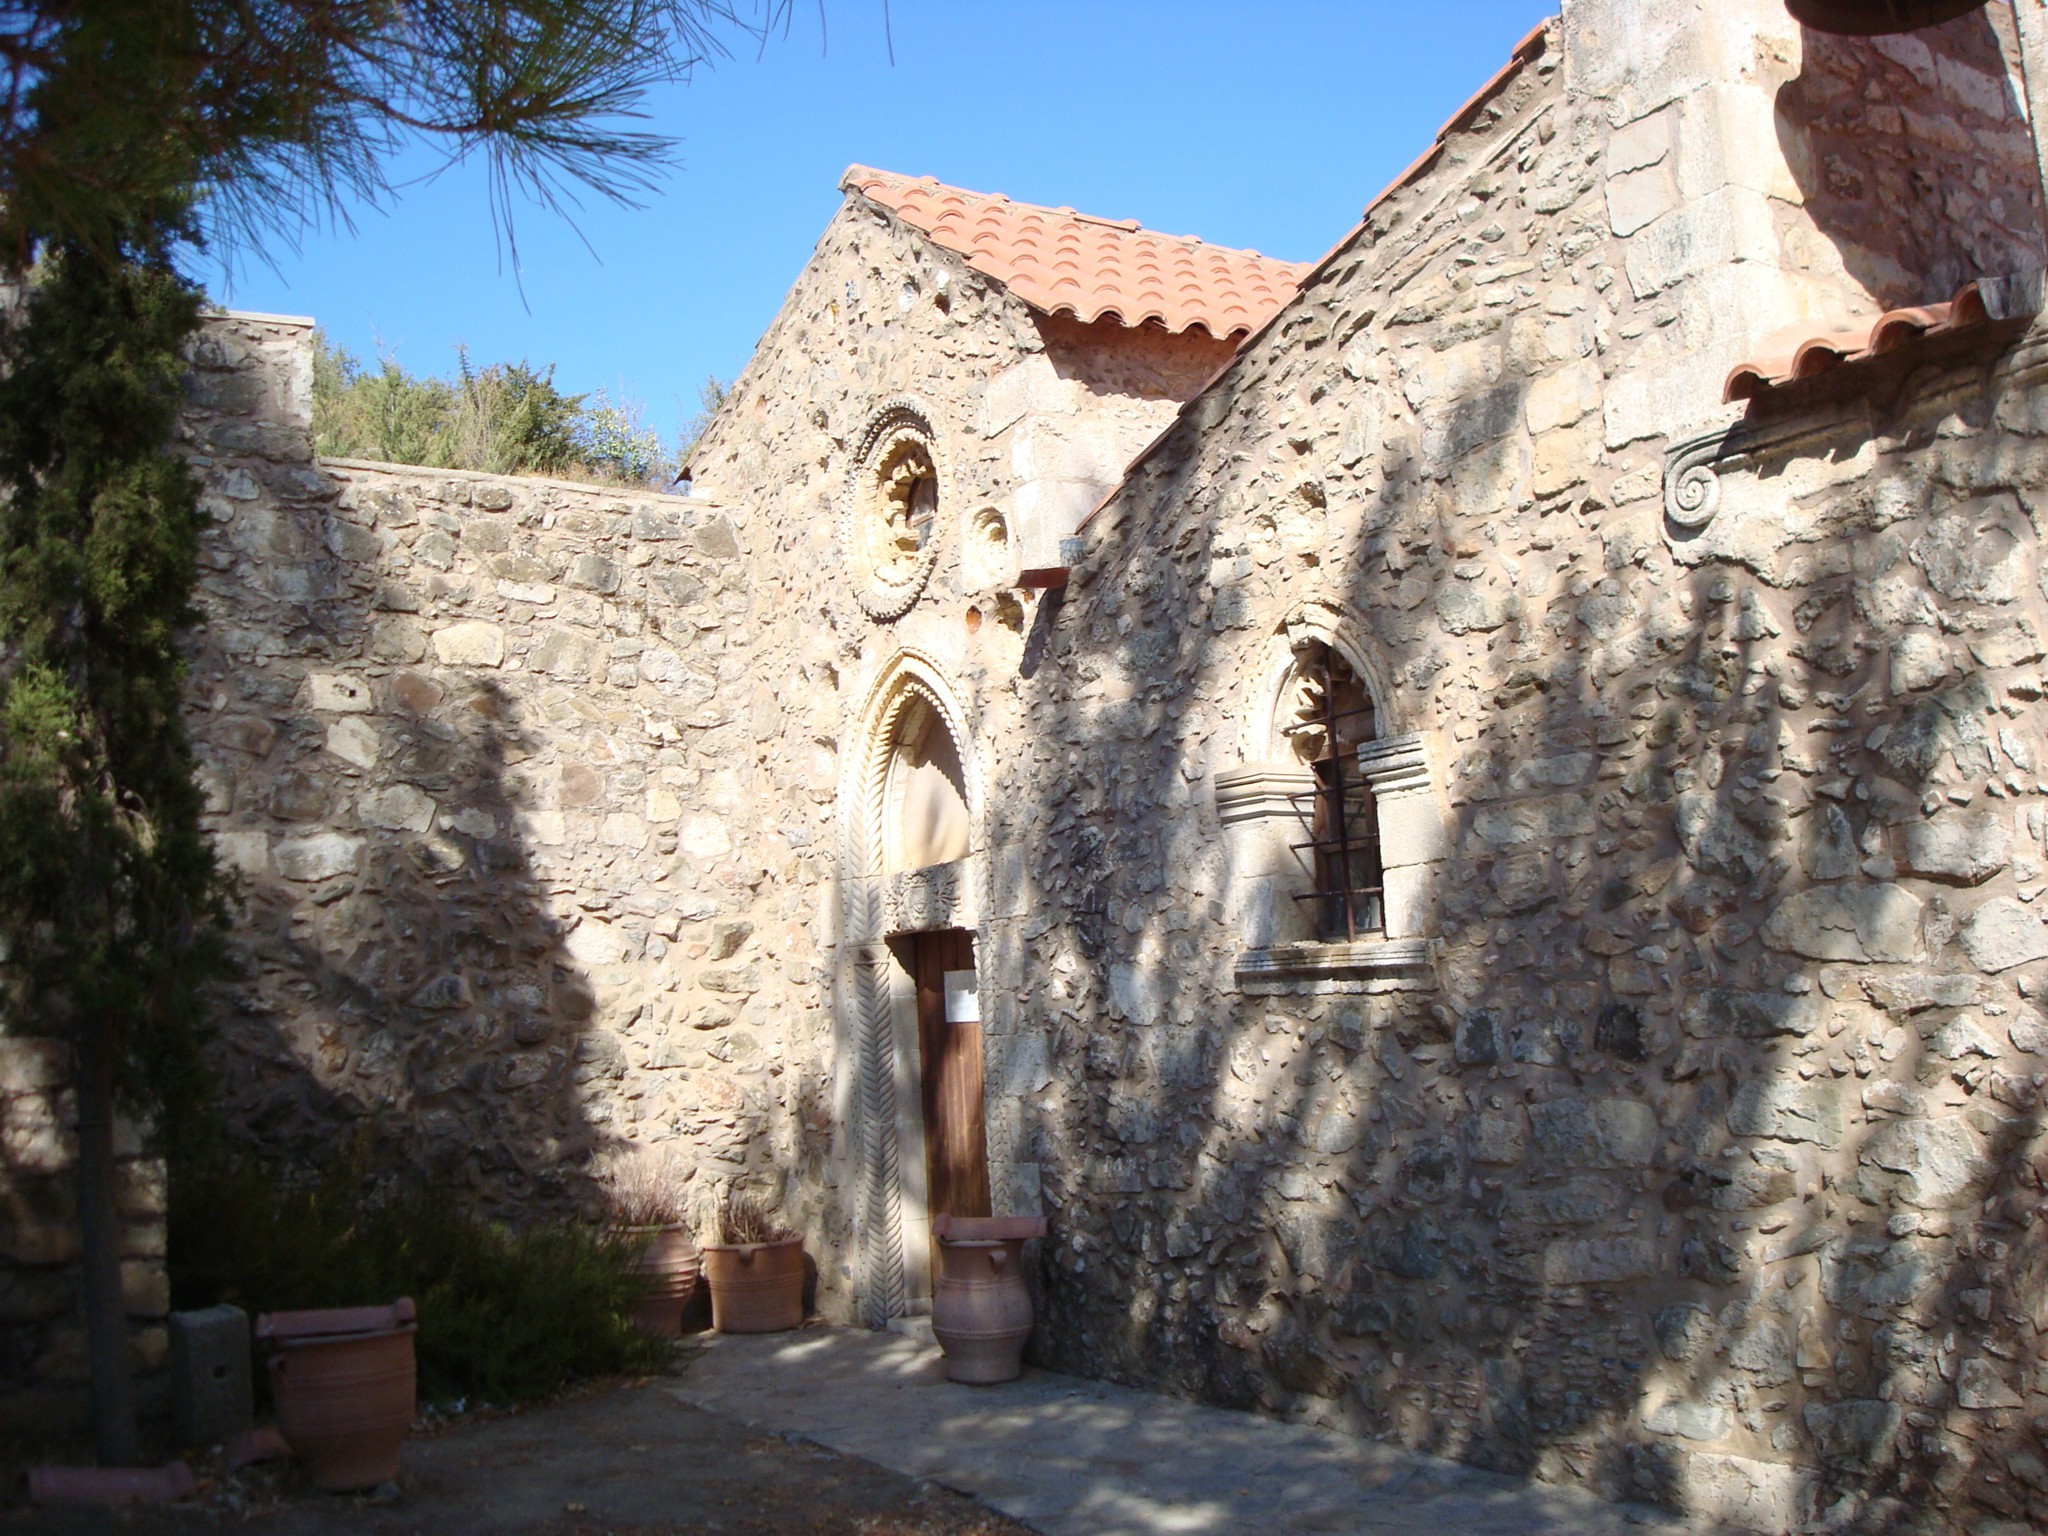 The Varsamonerou Monastery